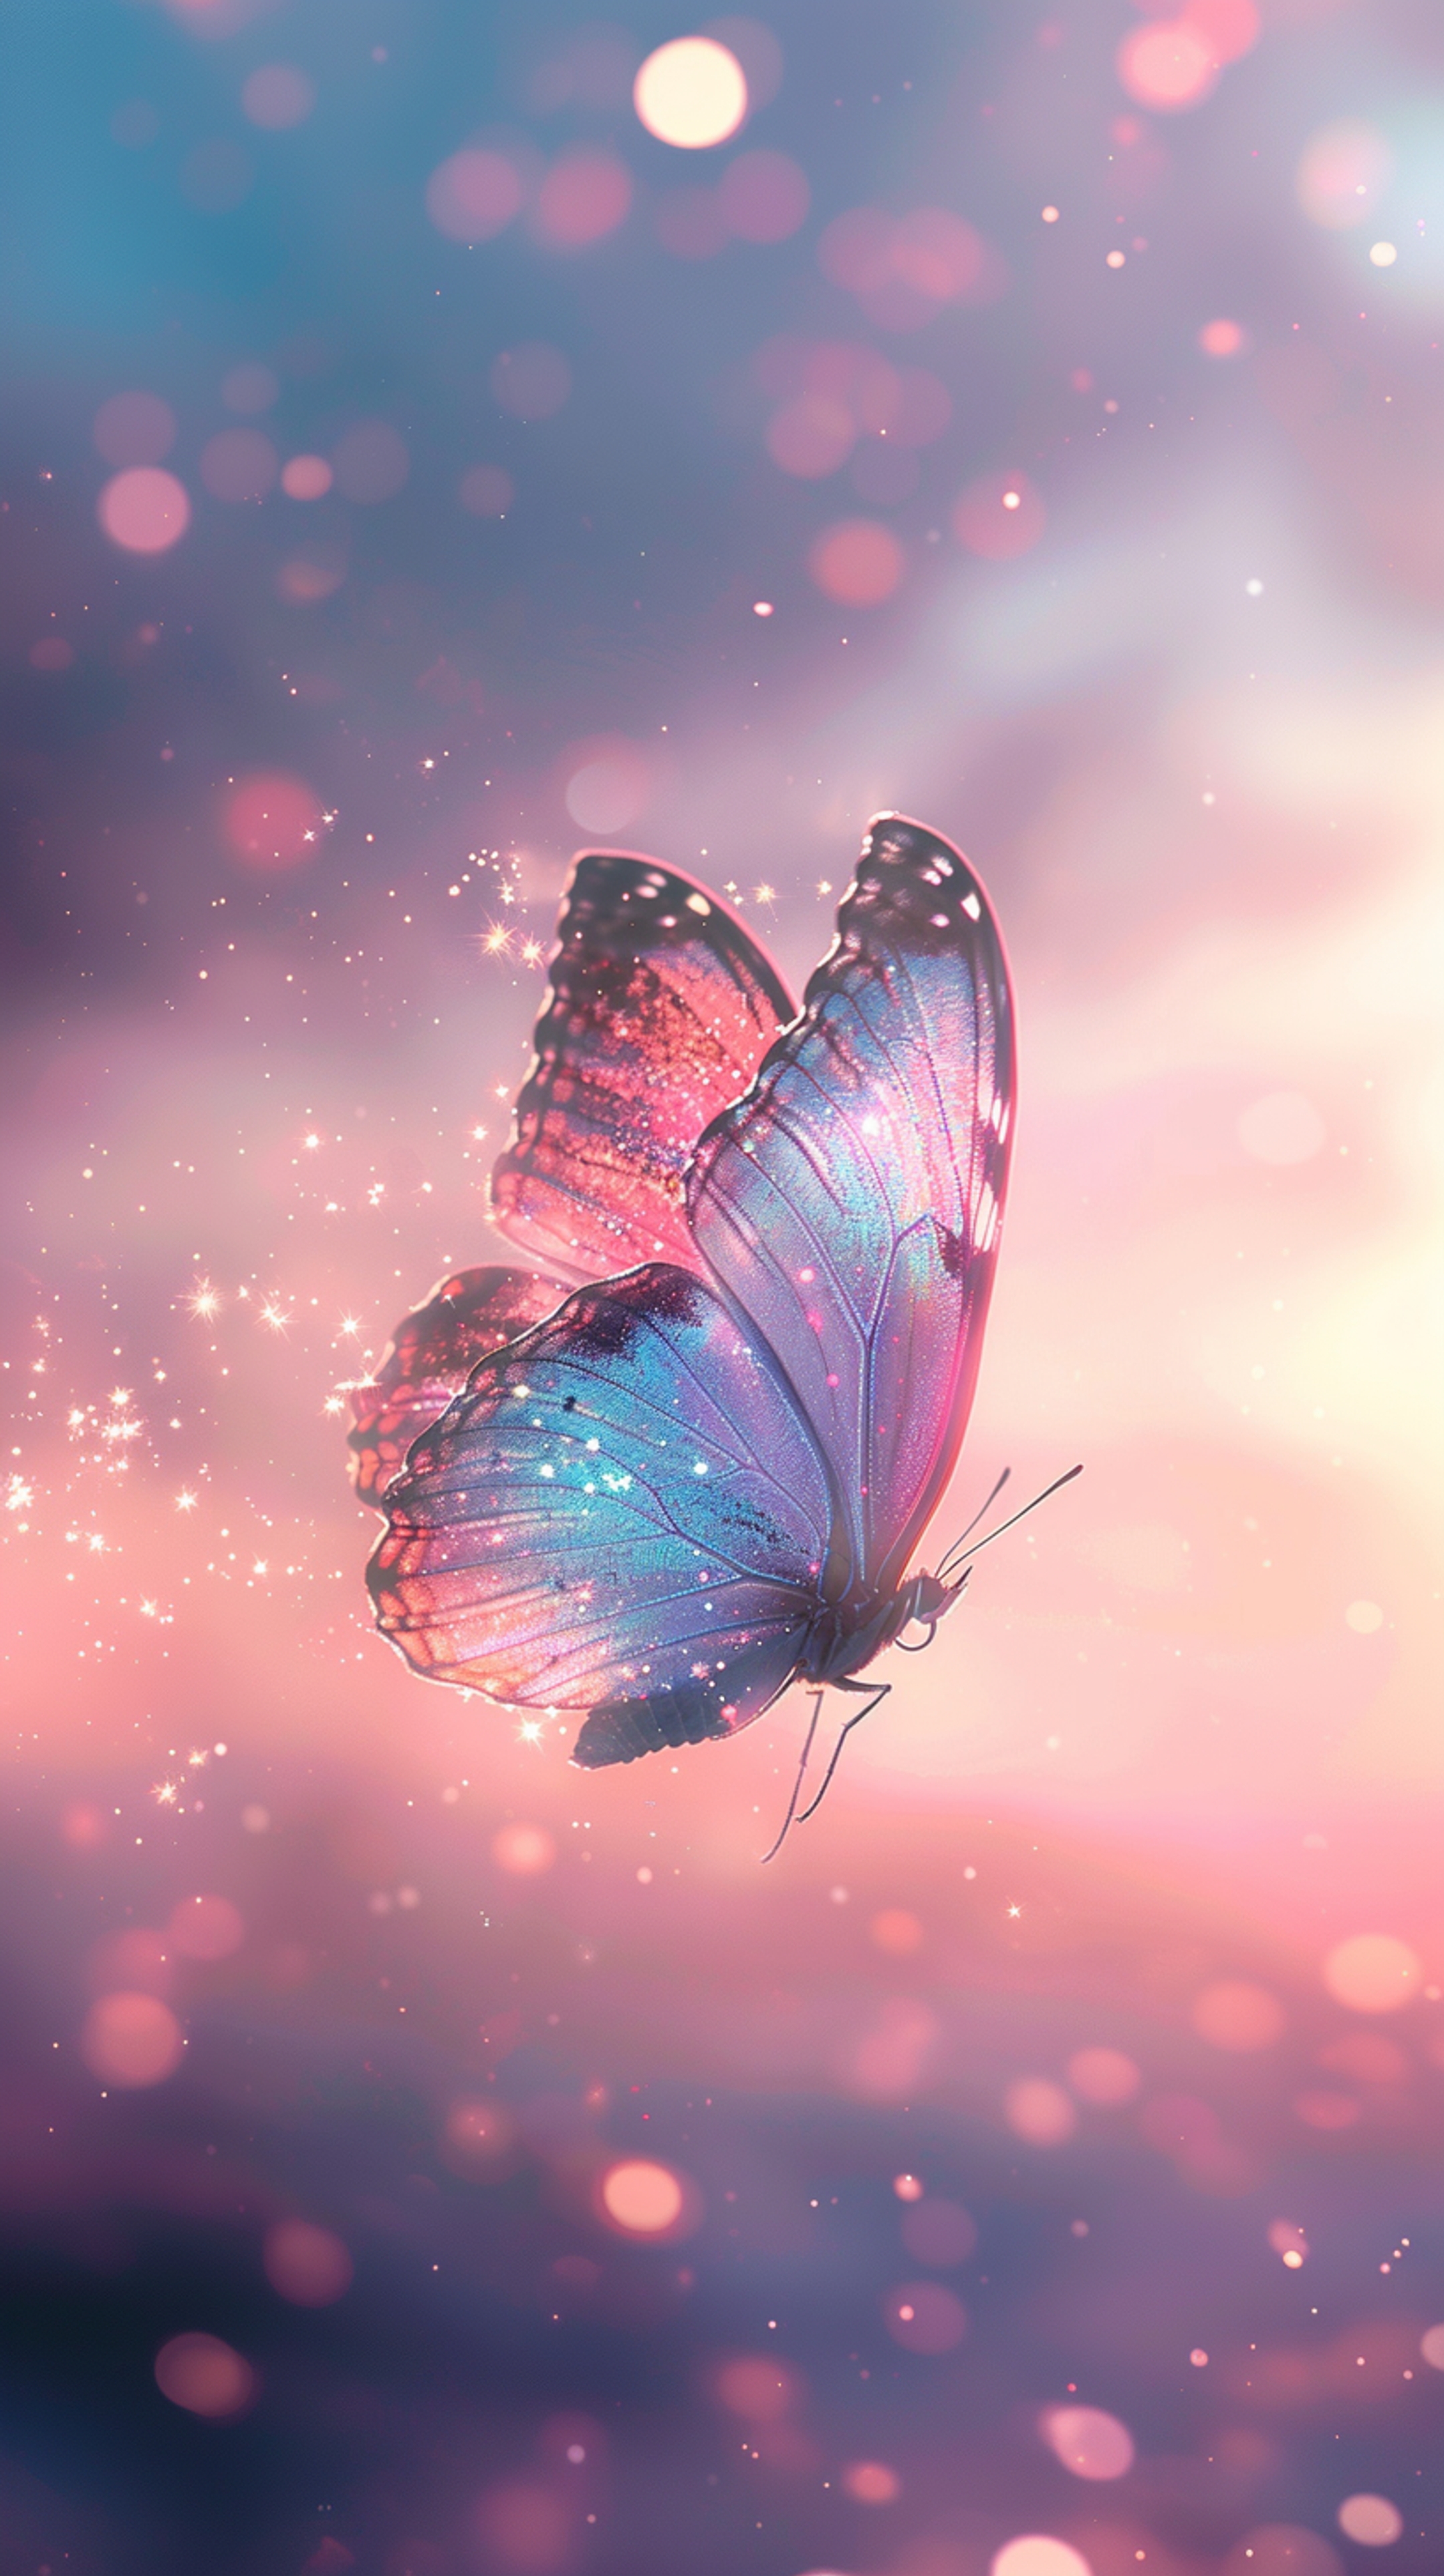 Magical Sparkling Butterfly in Dreamy Pink Sky Дэлгэцийн зураг[1278b2409cd84640a5d9]